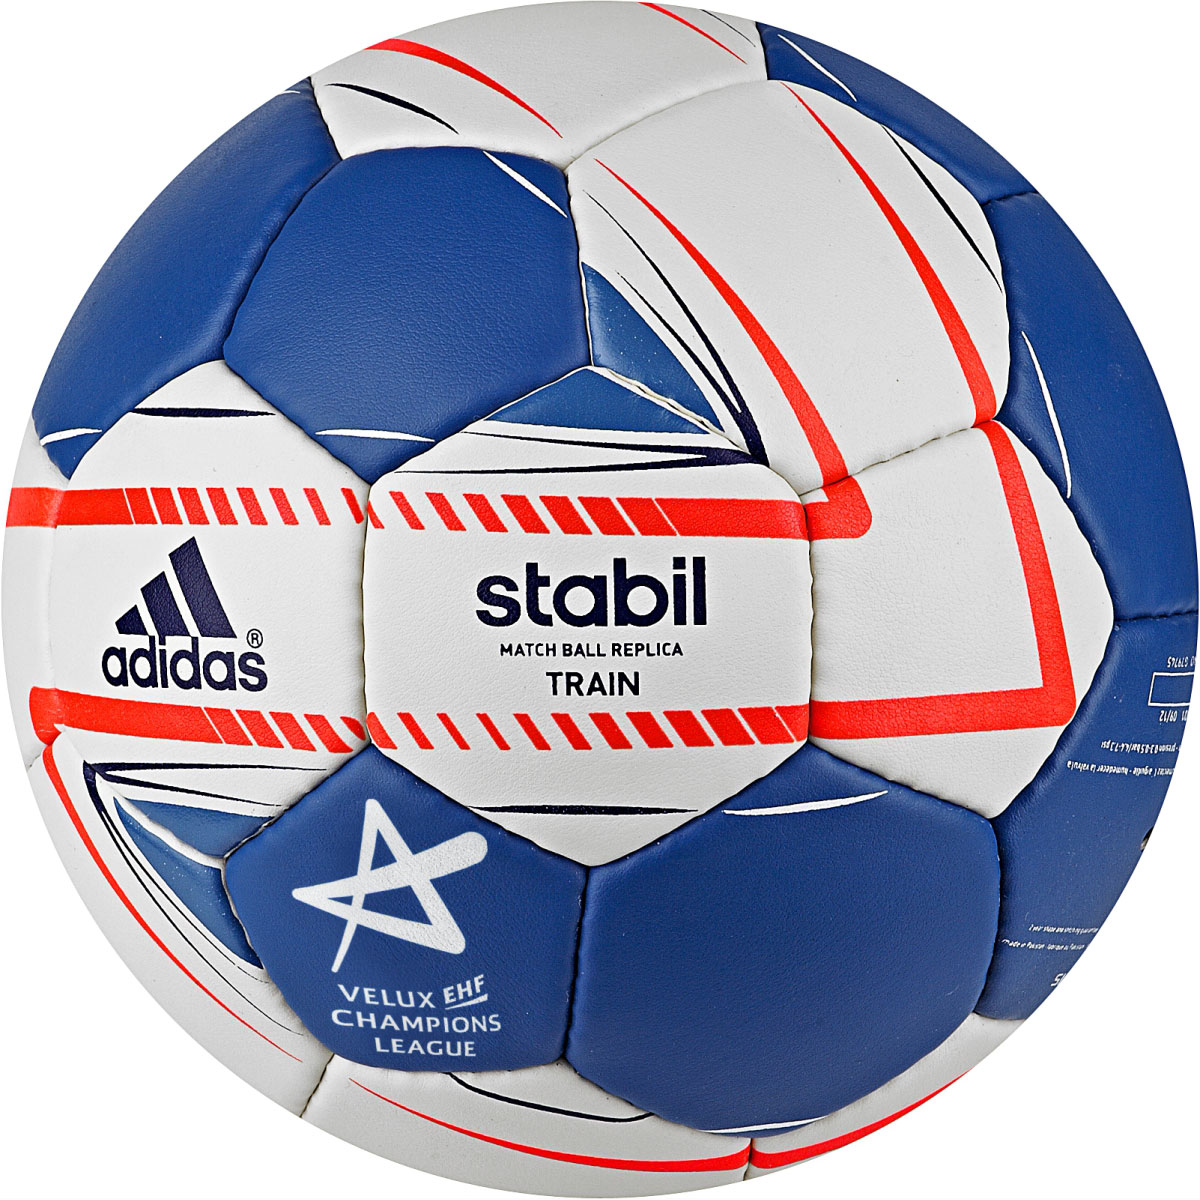 STABIL TRAIN - Handball ball